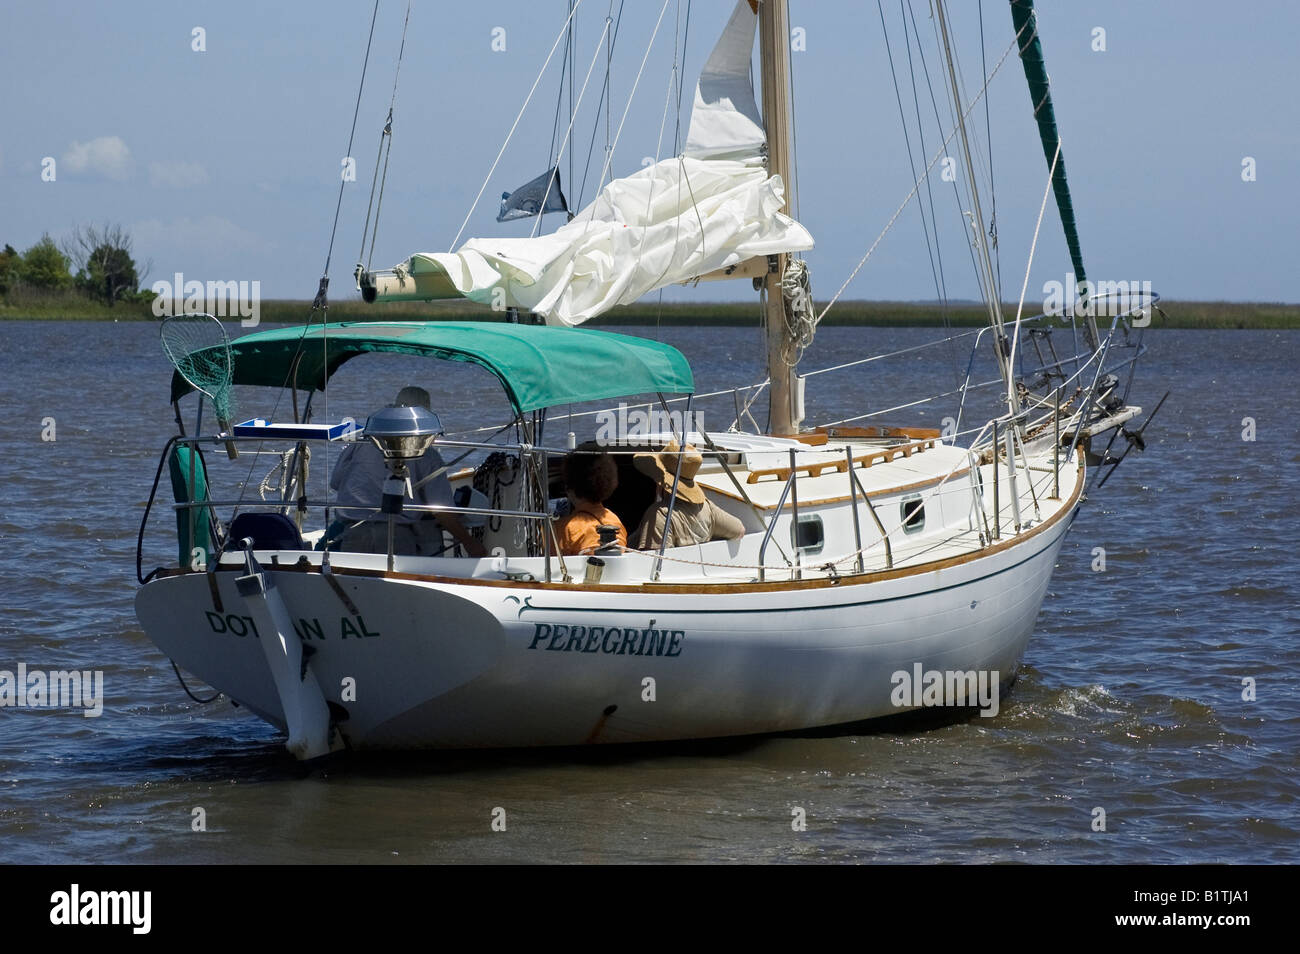 Segelboot-Rubrik auf der Apalachicola River Apalachicola-Florida Stockfoto